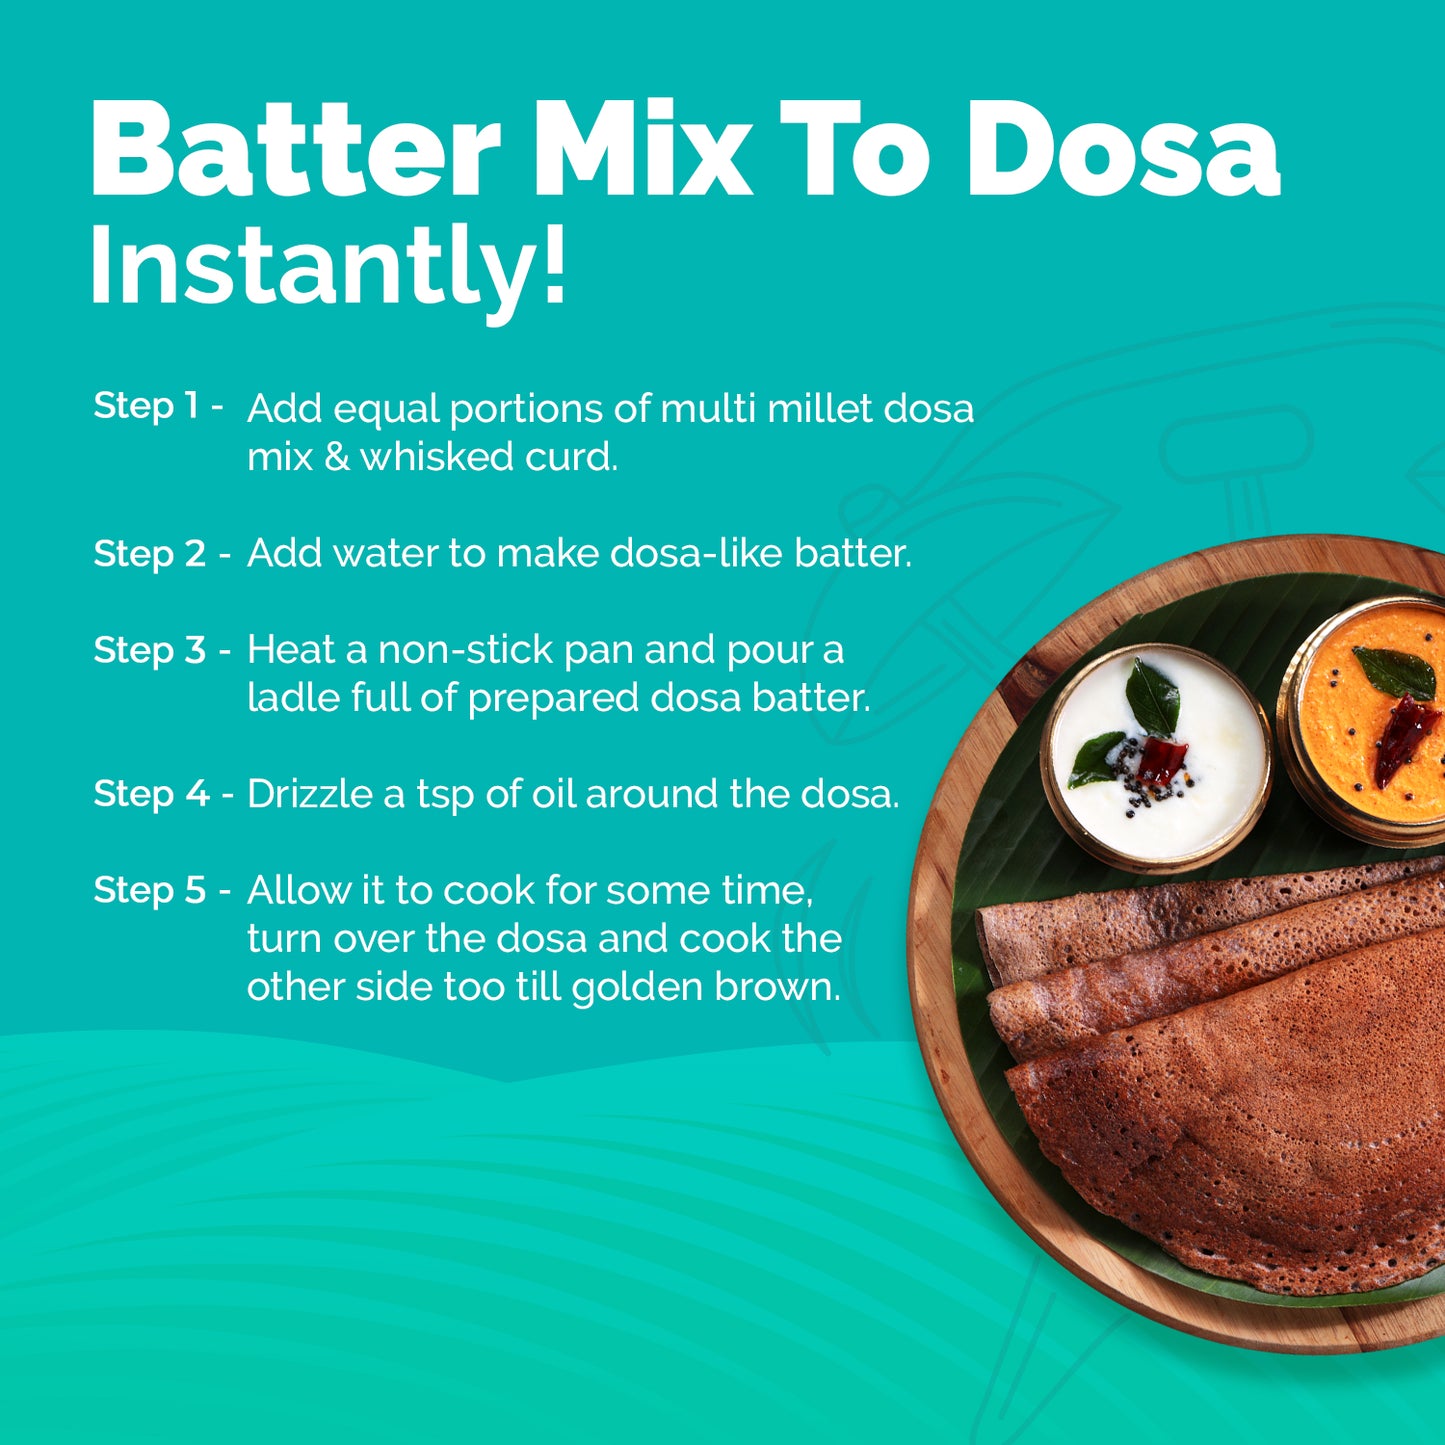 Multi Millet Breakfast Mixes | Idli Mix & Dosa Mix  Combo Pack